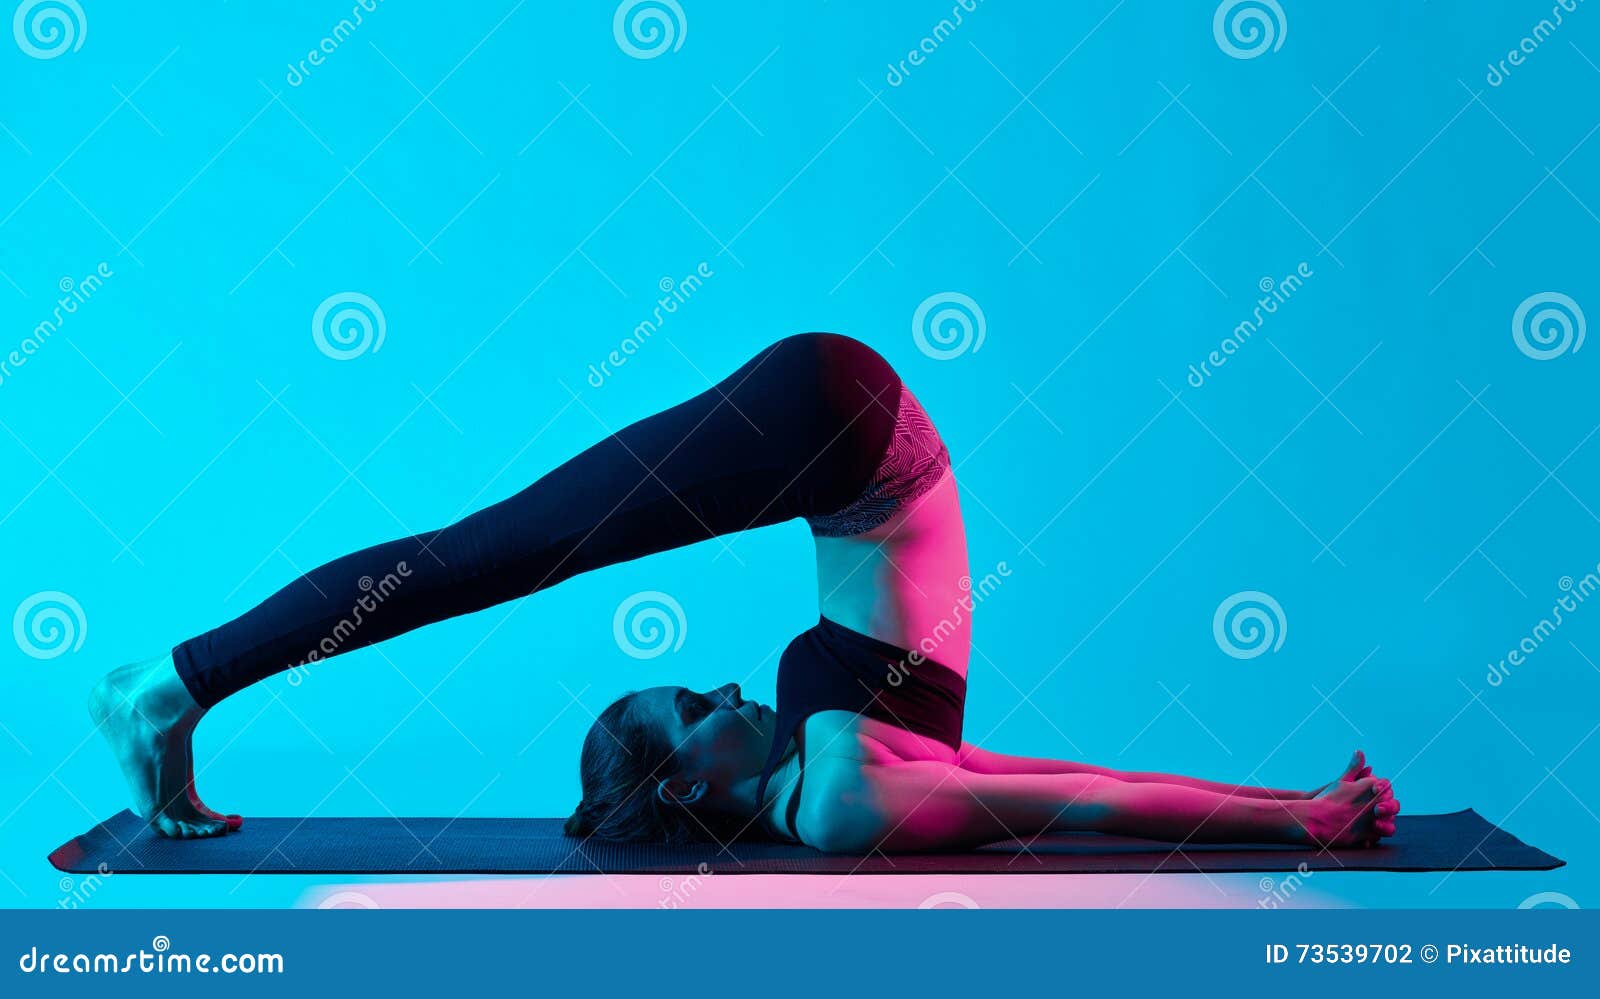 woman yoga exercices halasana plow pose